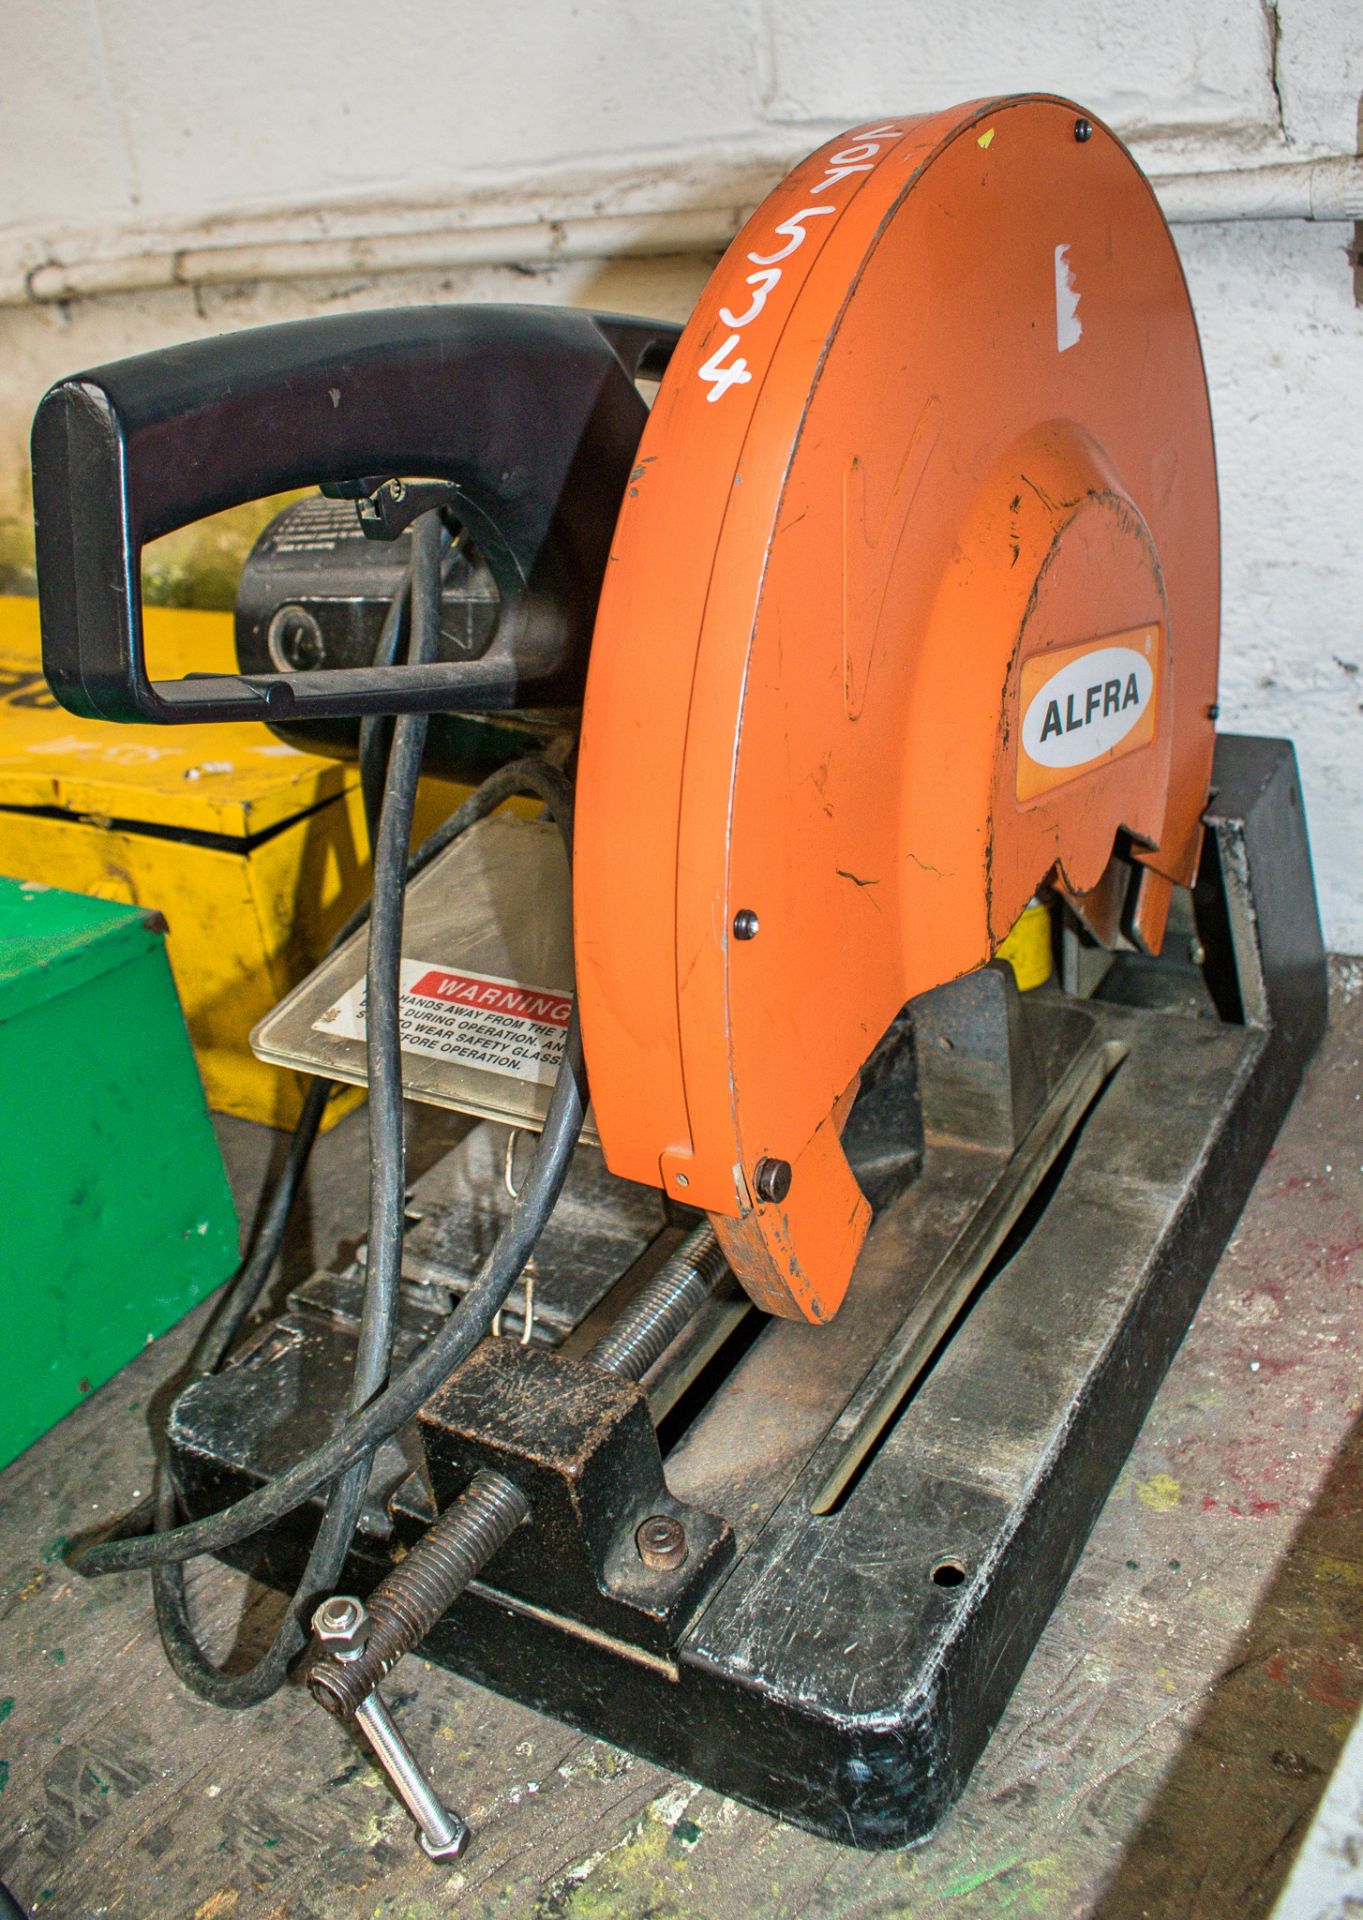 Alfra 110v circular saw